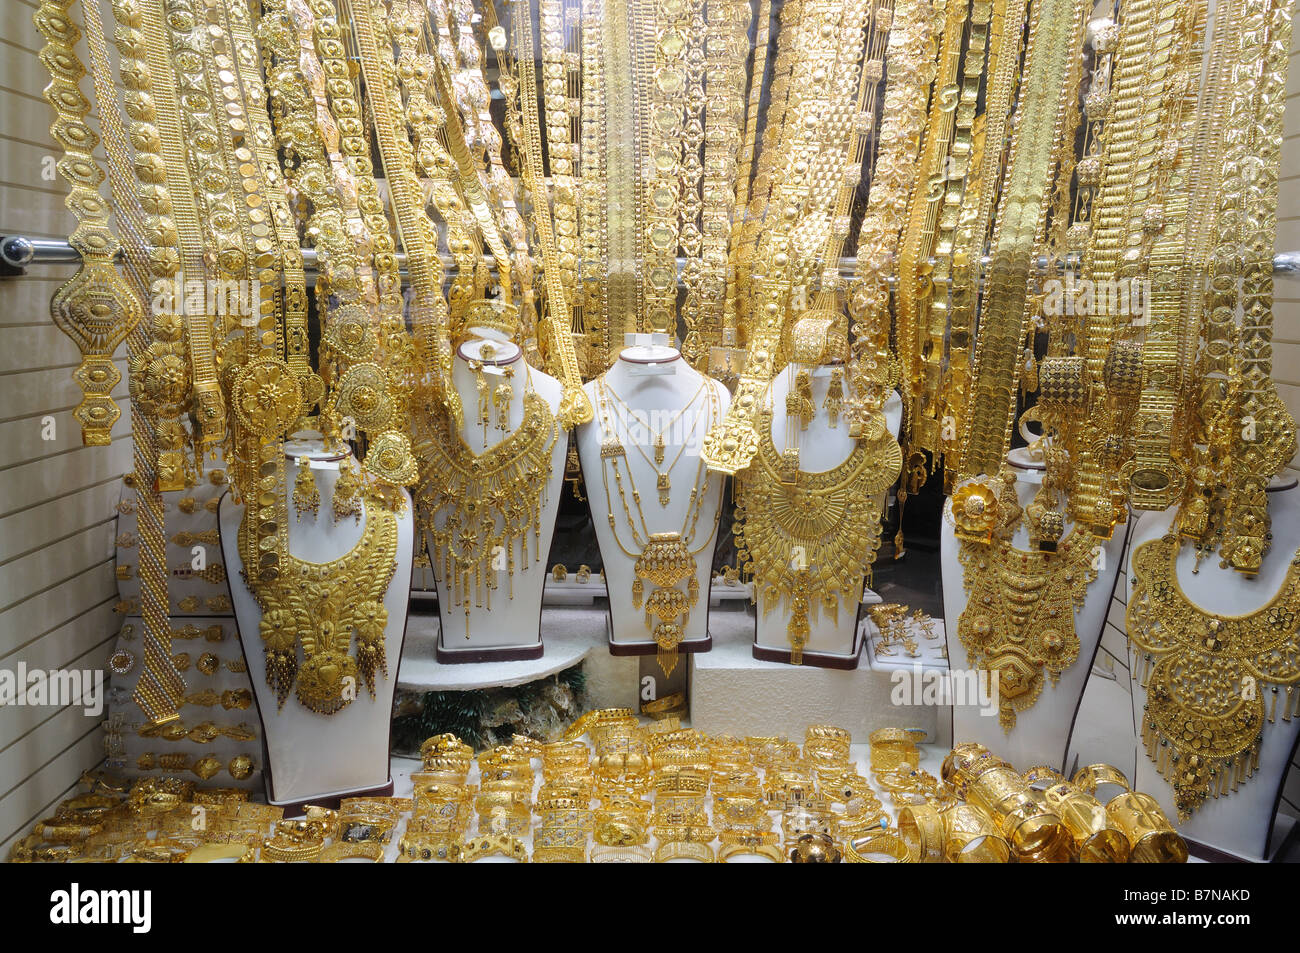 Jewelry at Dubai's Gold Souq Stock Photo